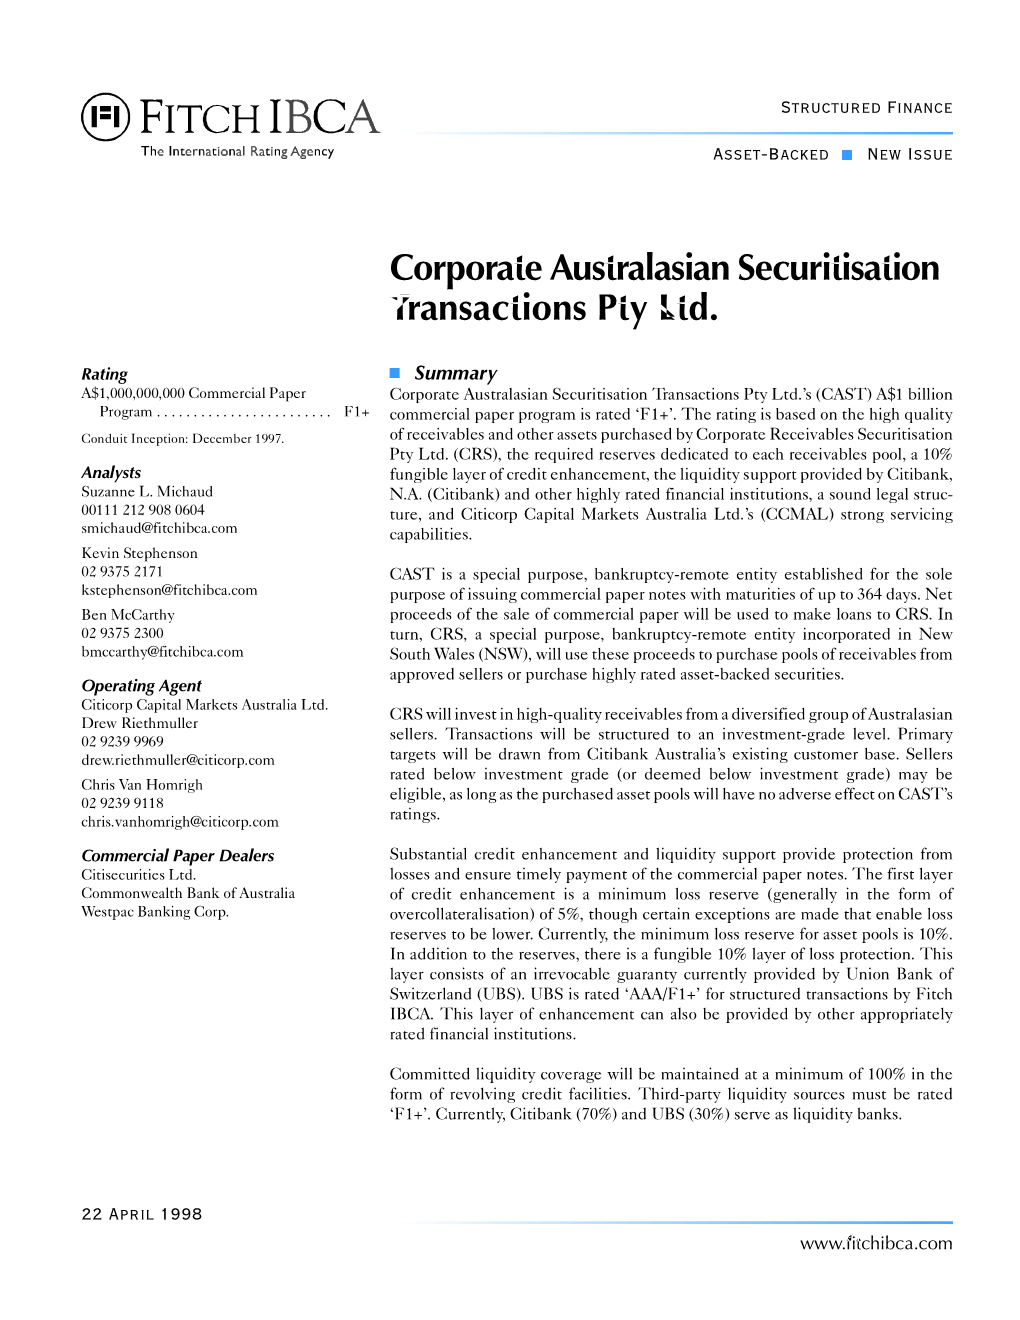 Corporate Australasian Securitisation Transactions Pty Ltd